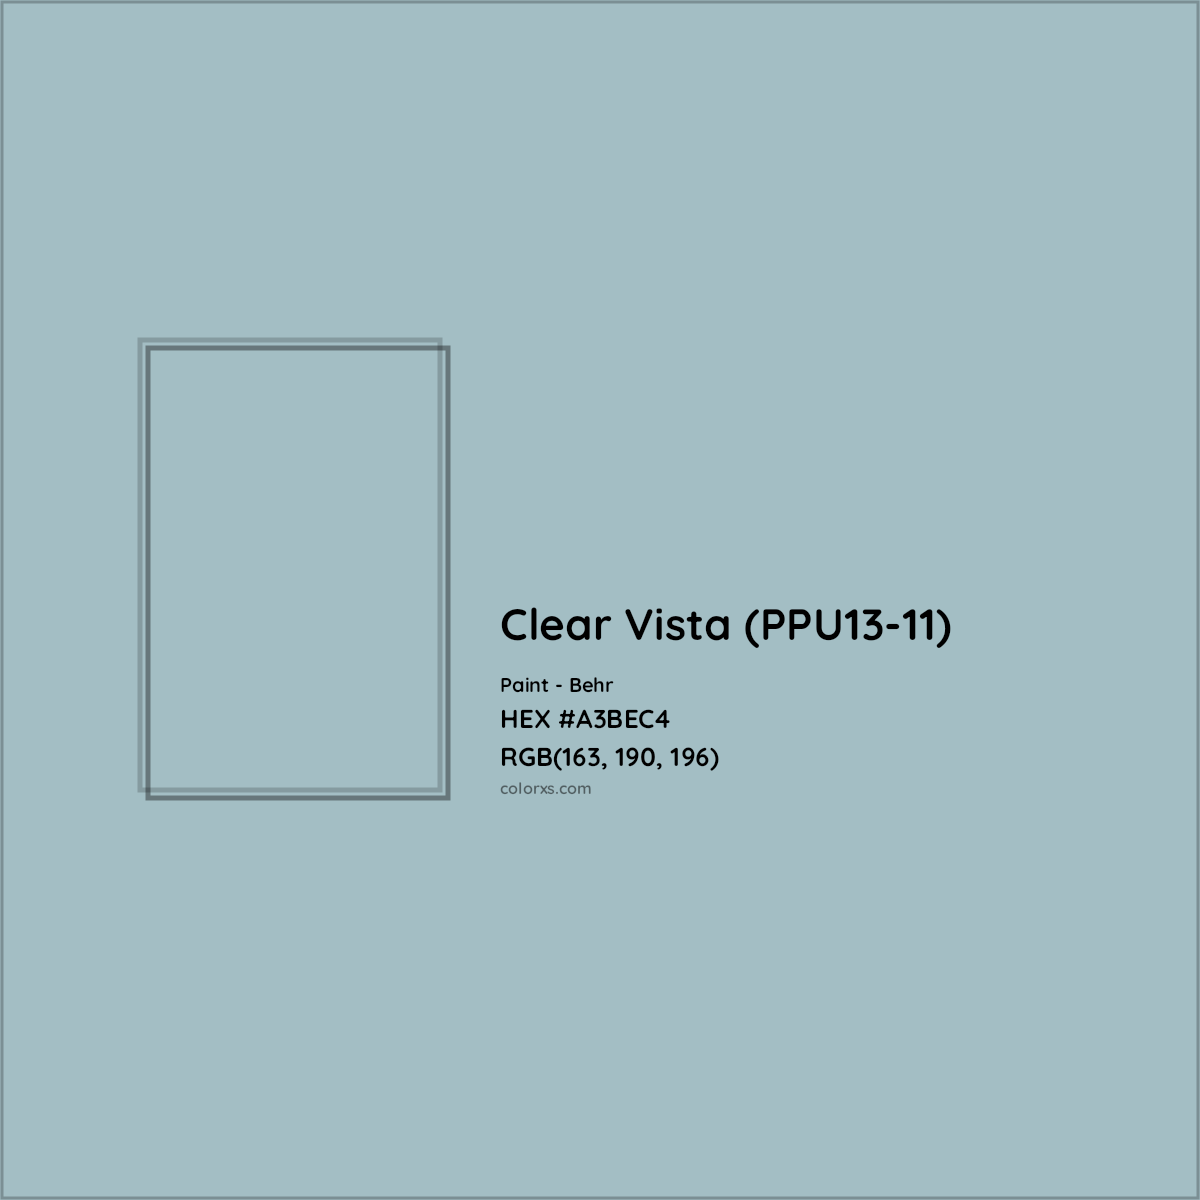 HEX #A3BEC4 Clear Vista (PPU13-11) Paint Behr - Color Code